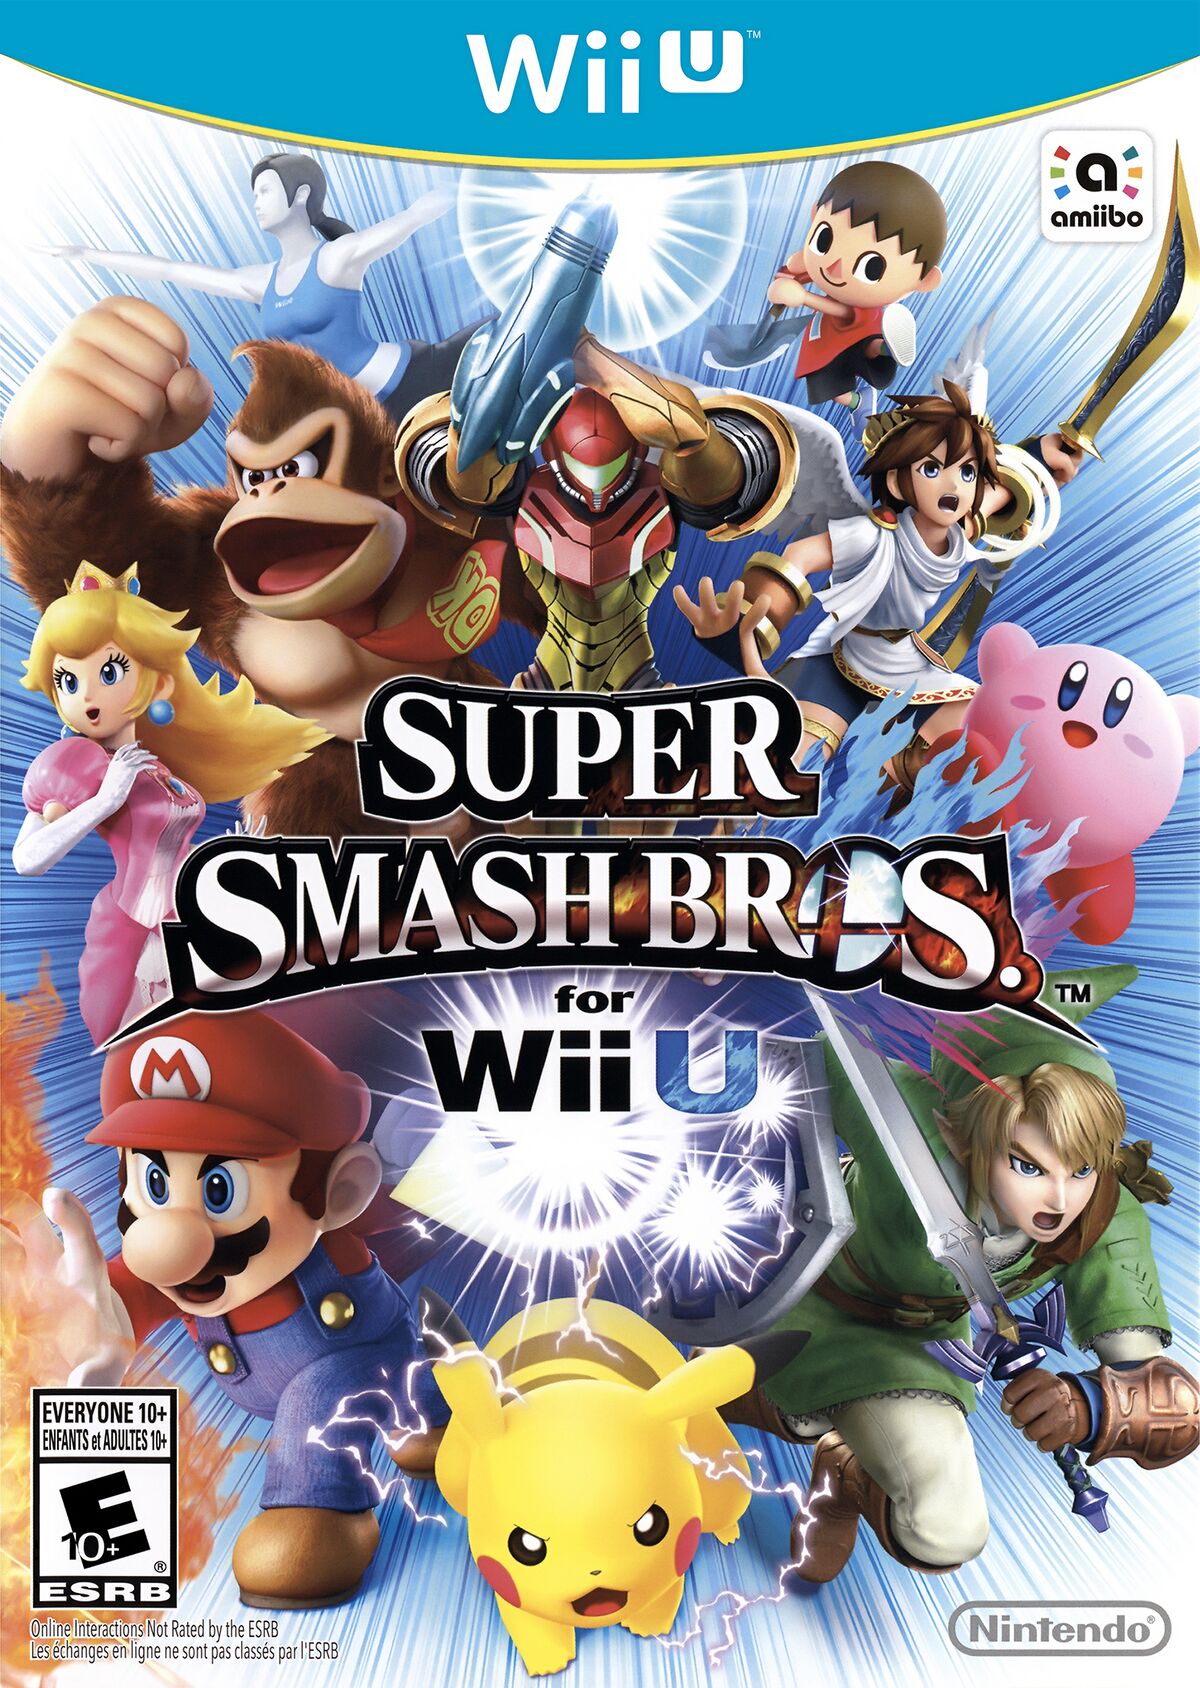 Wii Fit Trainer - SmashWiki, the Super Smash Bros. wiki